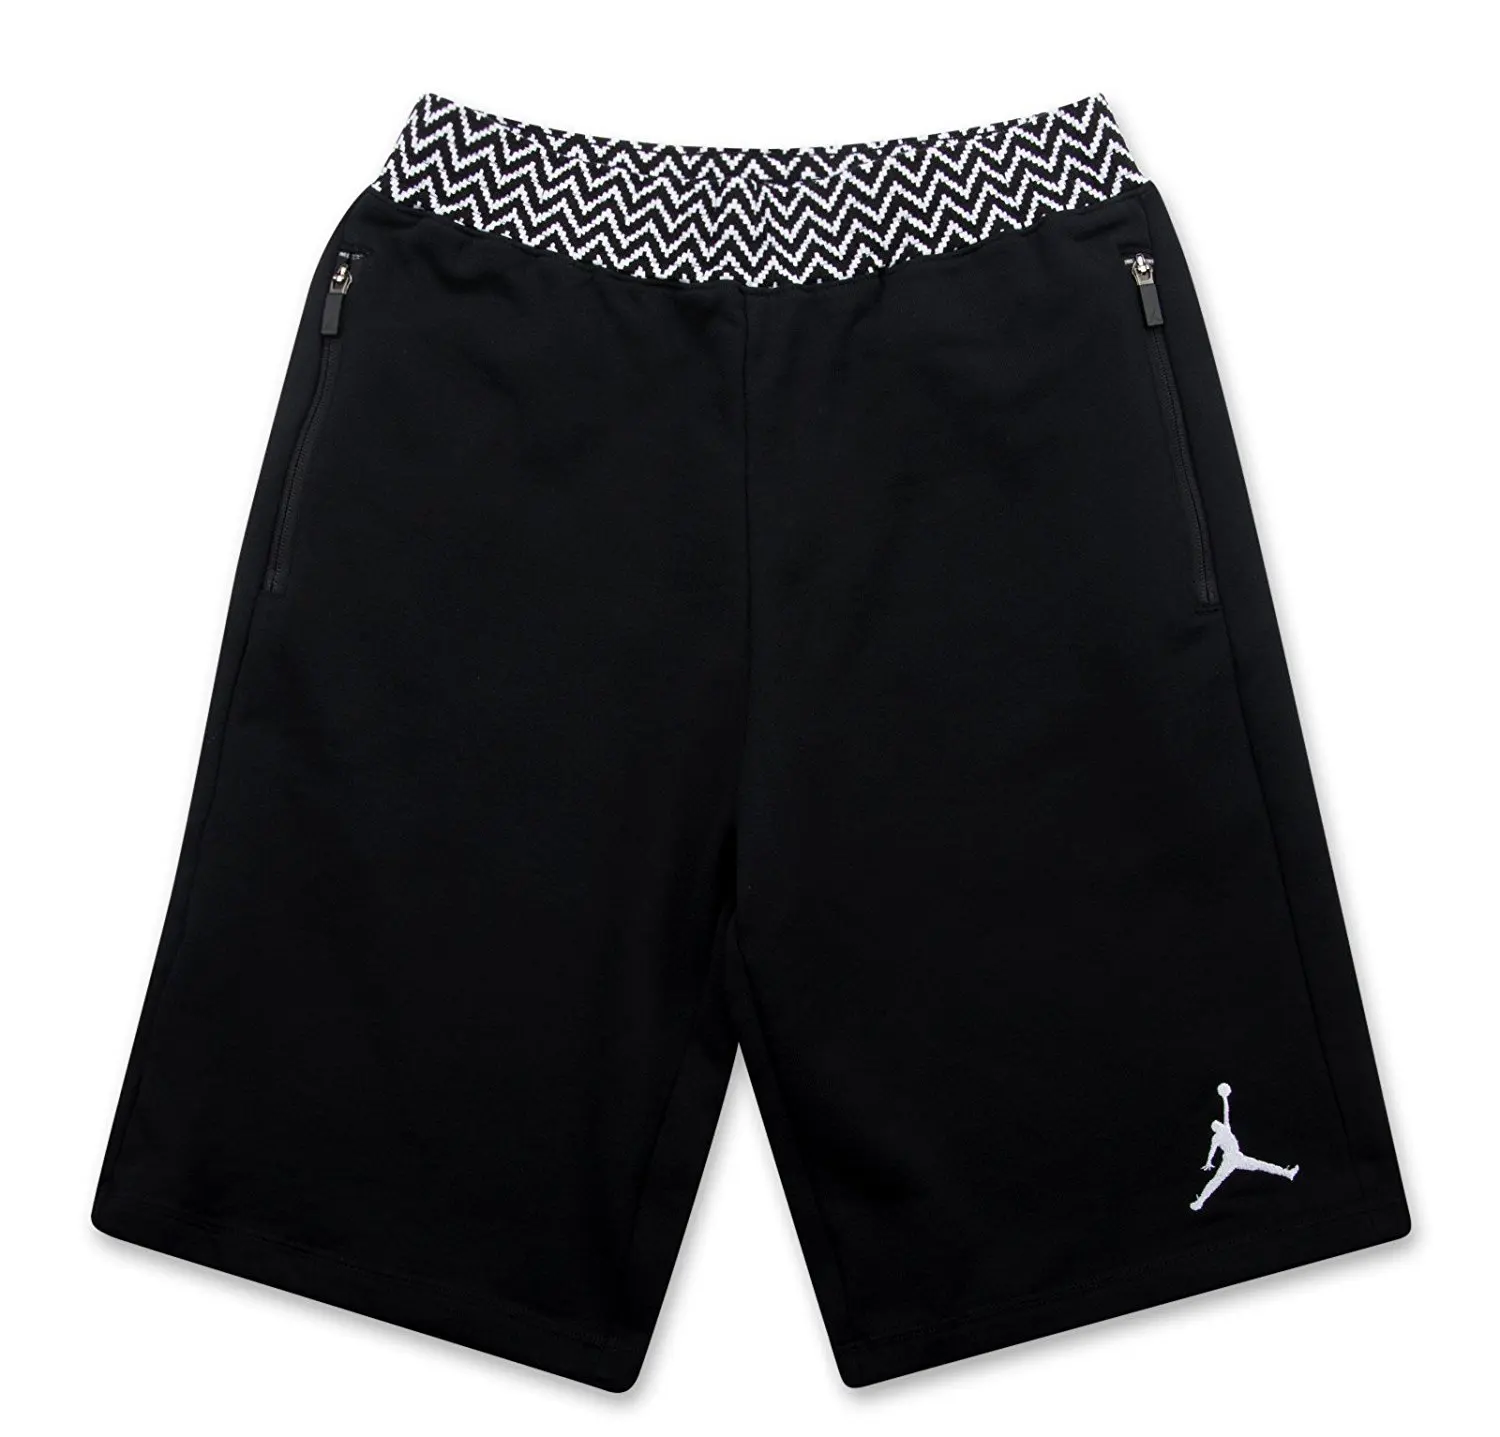 Cheap Air Jordan Cargo Shorts, find Air Jordan Cargo Shorts deals on ...